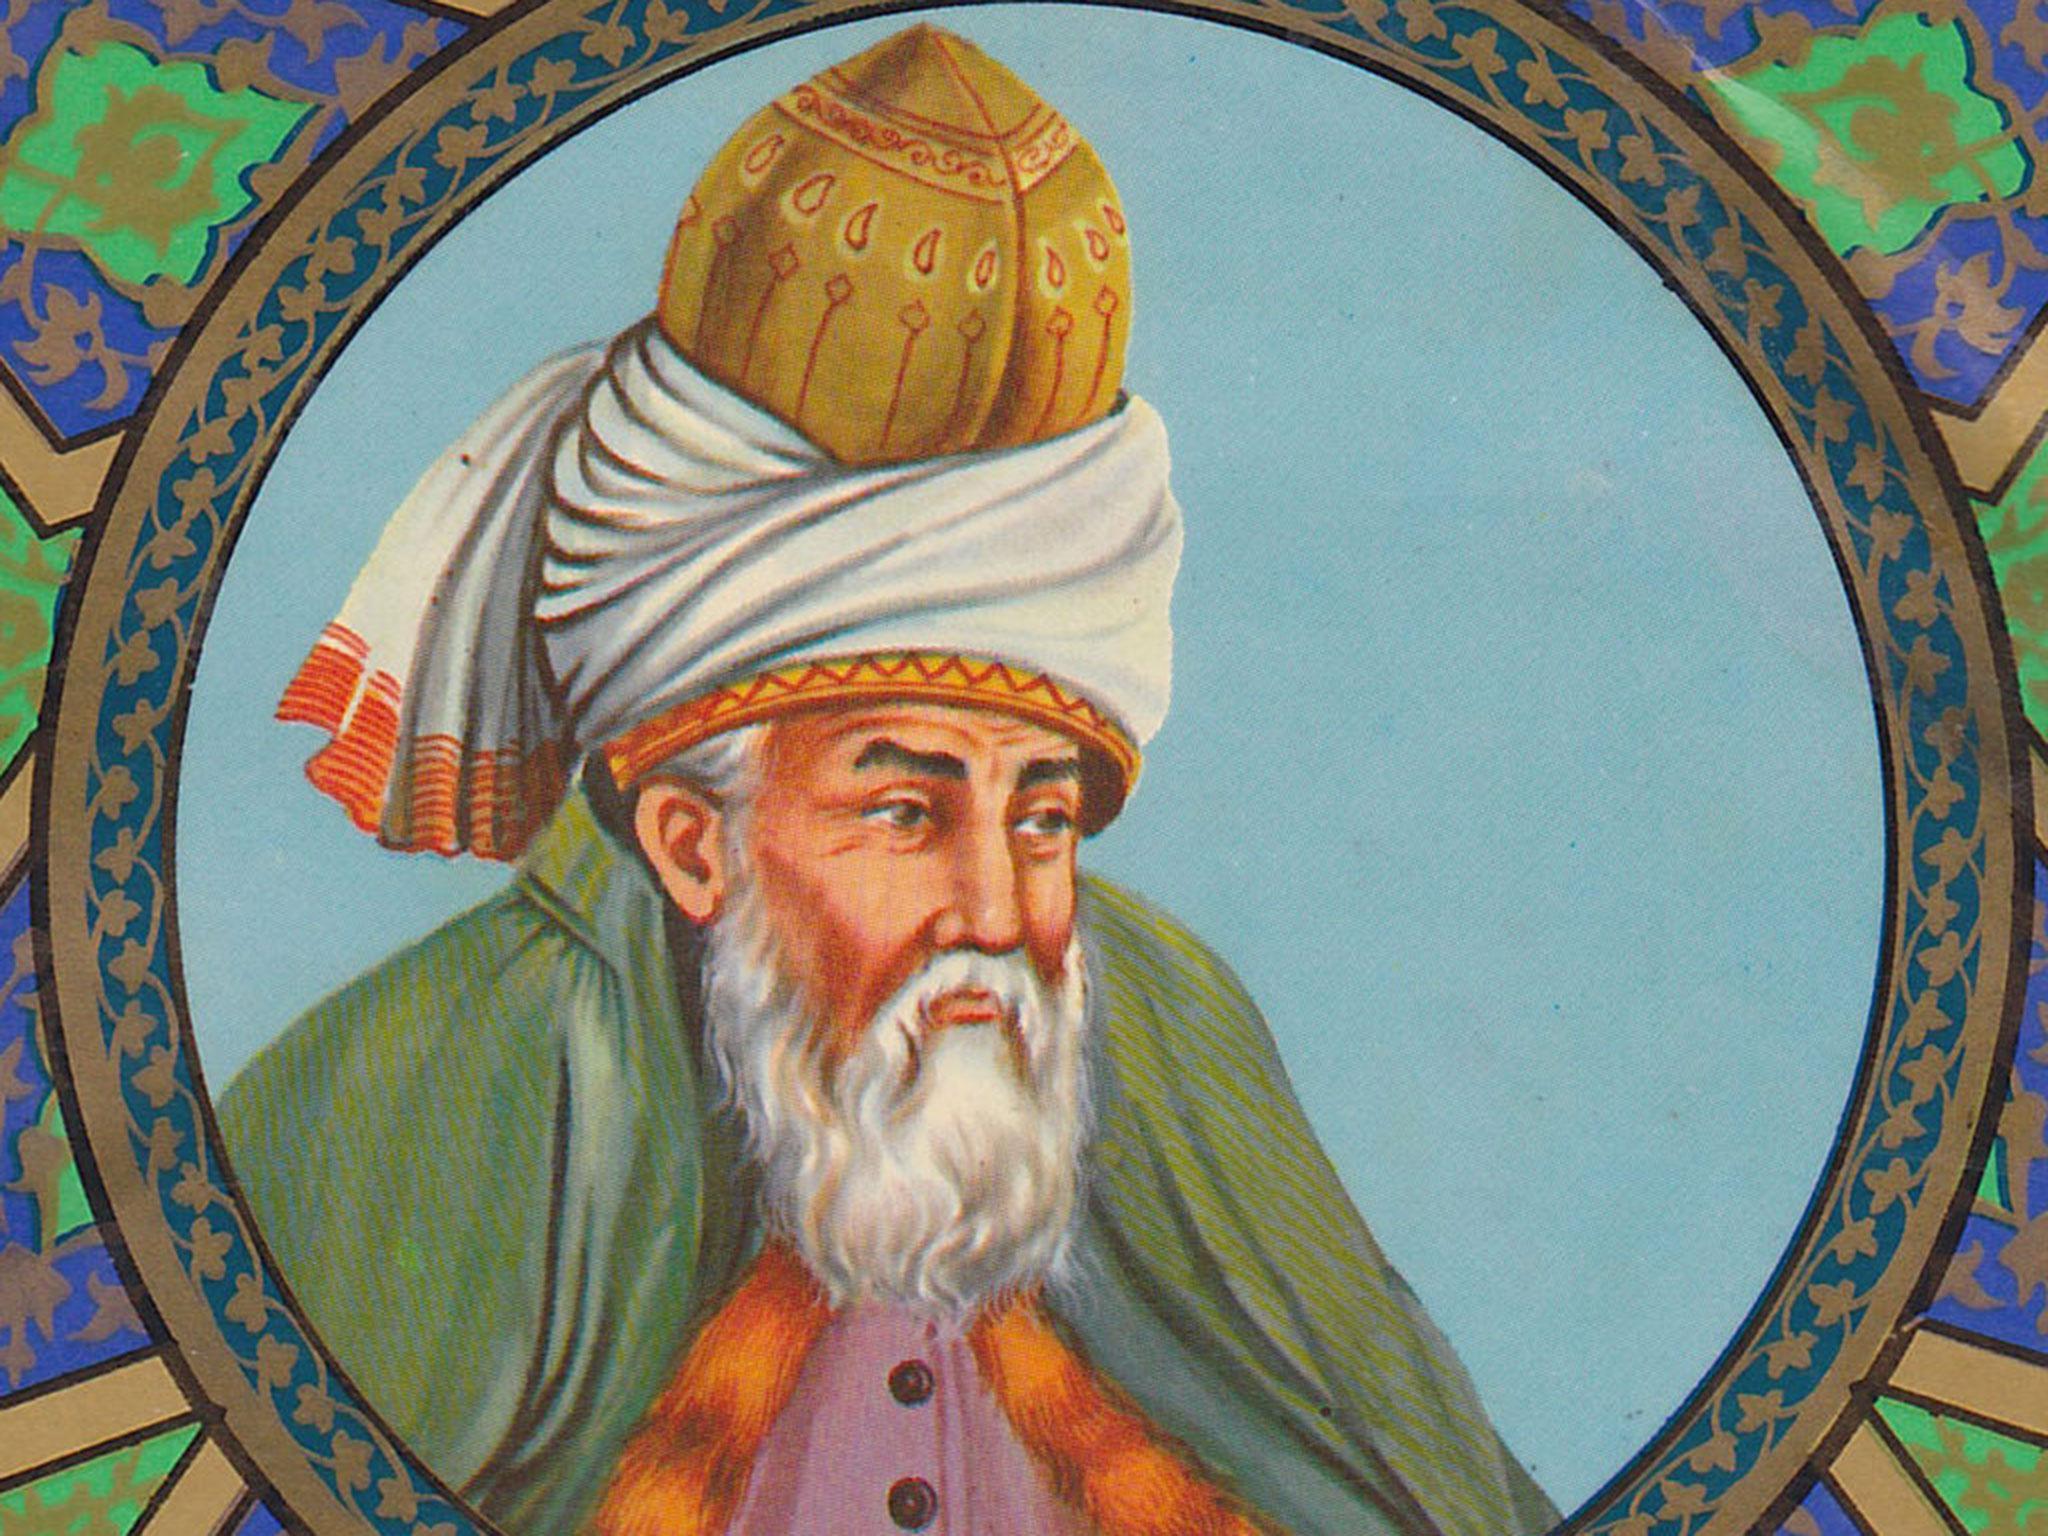 Poet and theologian Rumi